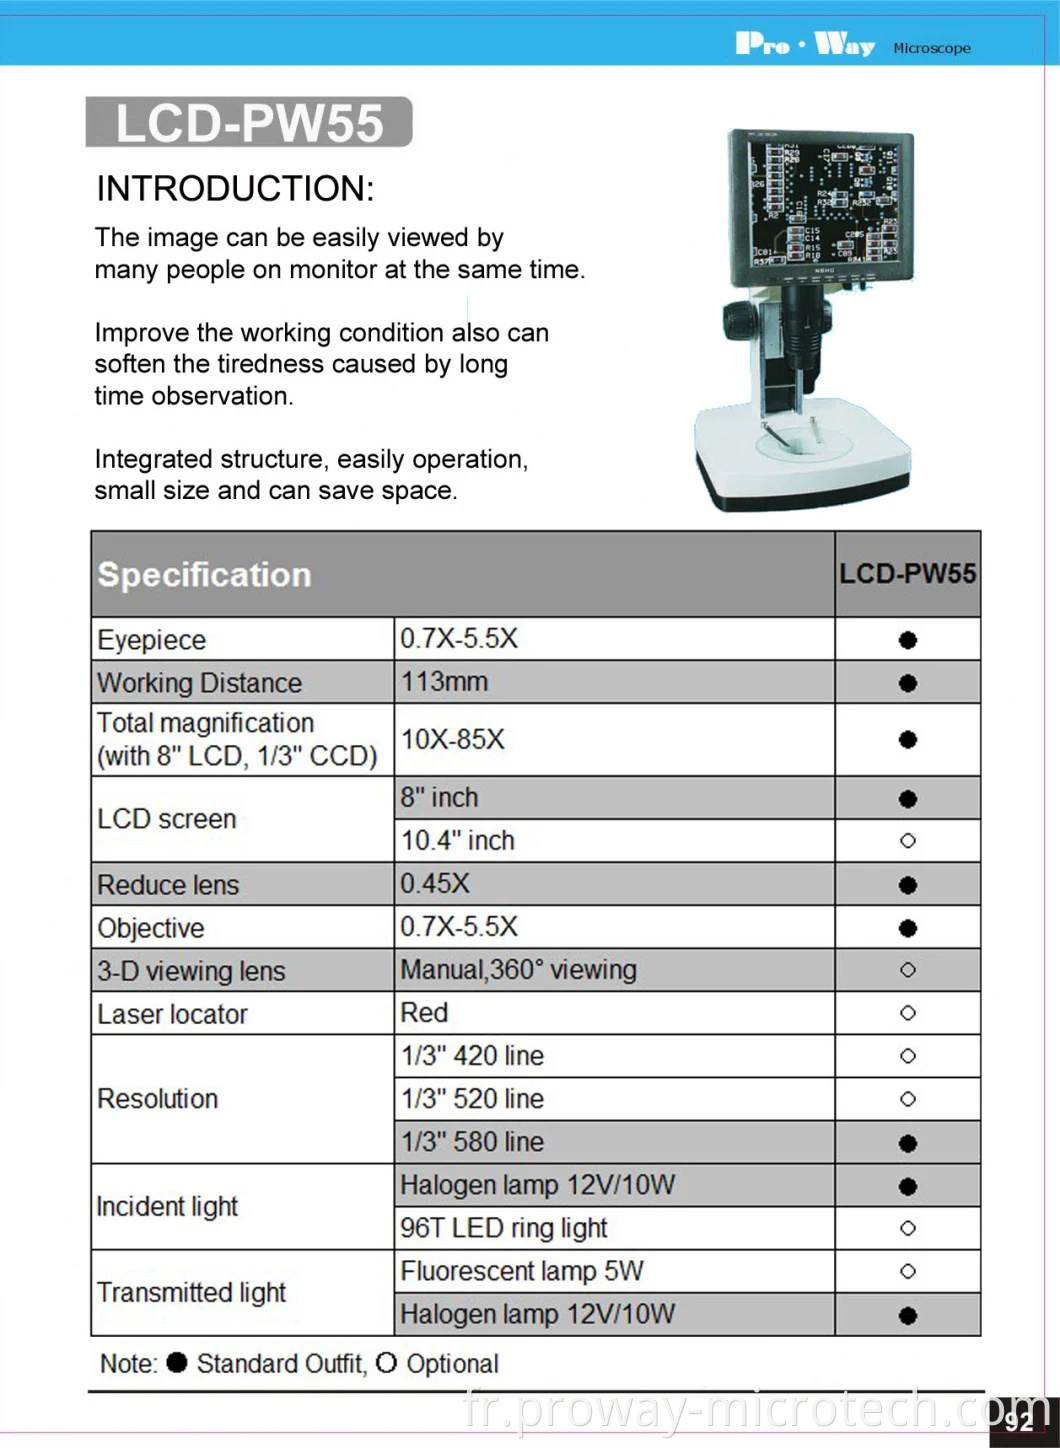 Microscope stéréo vidéo professionnel avec écran LCD (LCD-PW55)